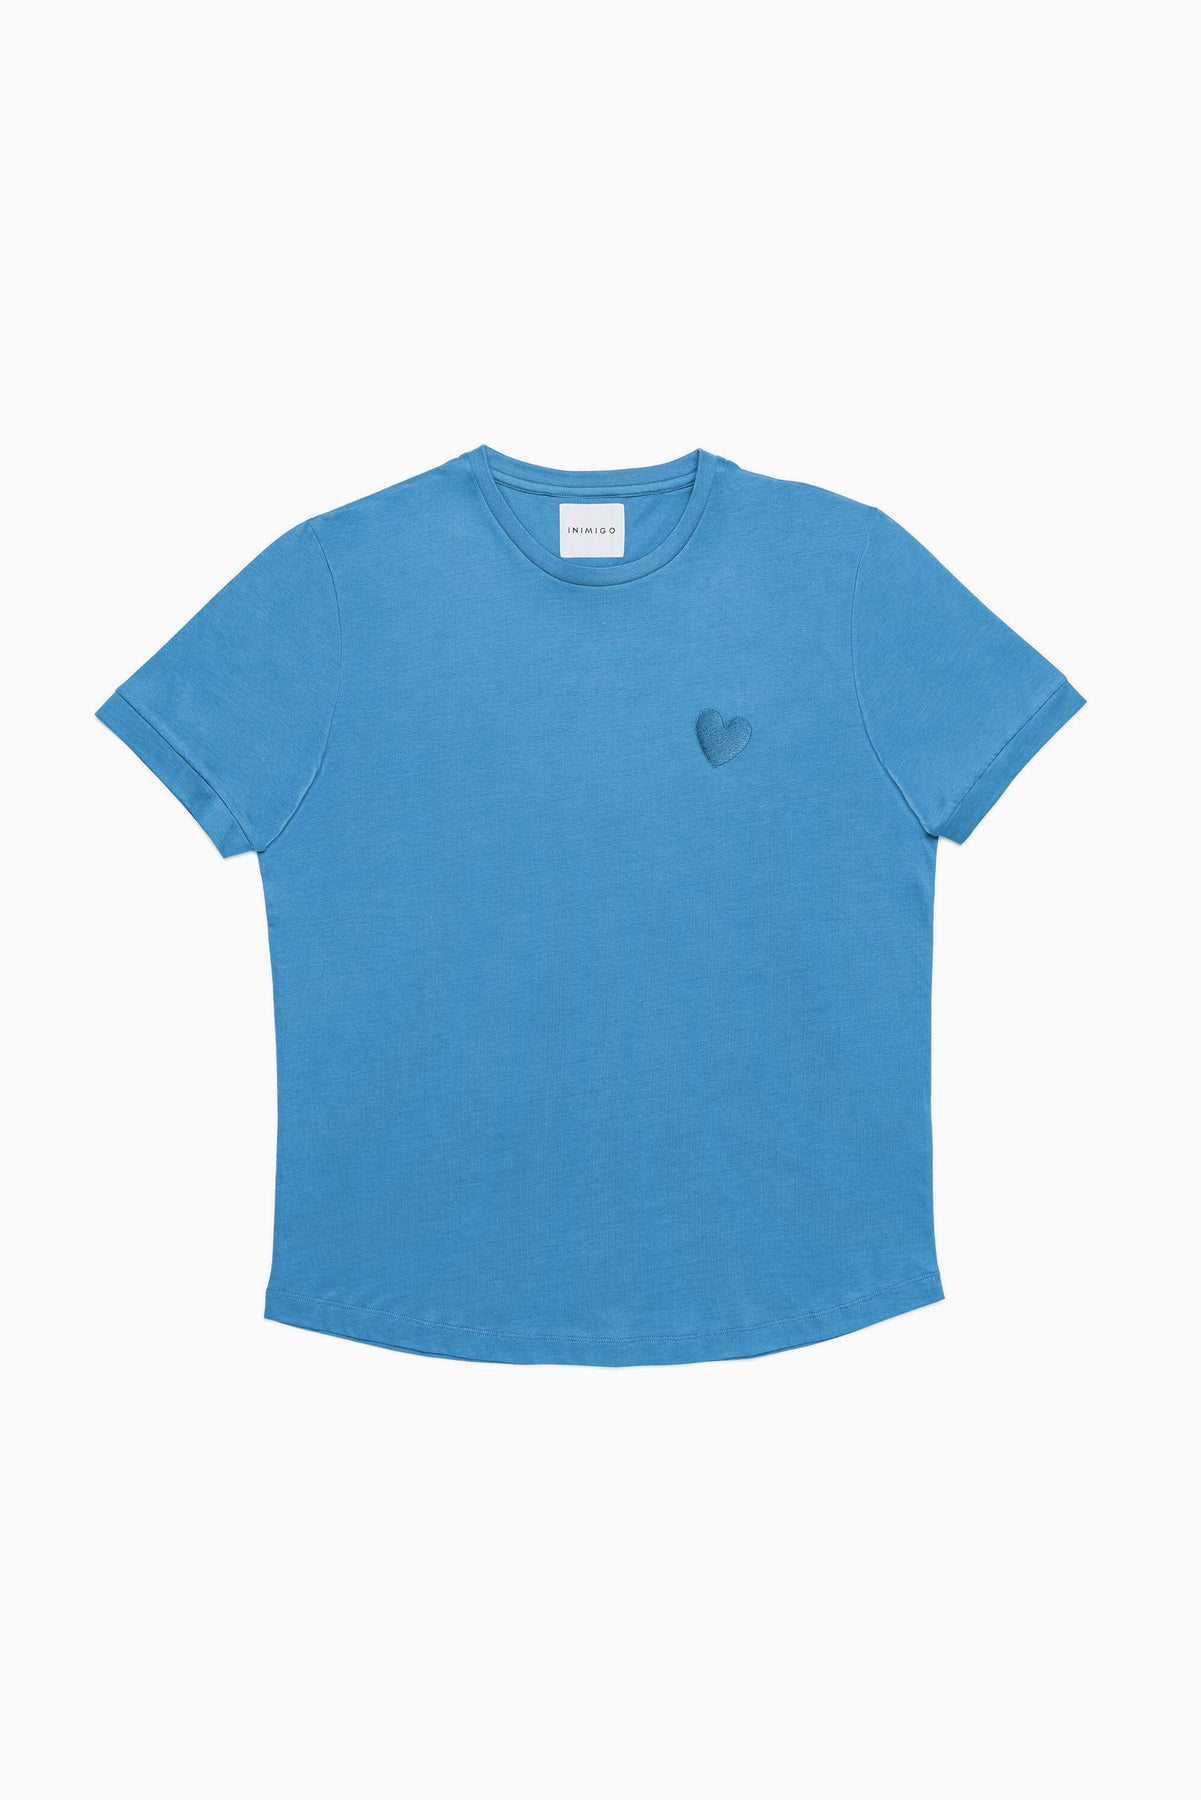 INIMIGO Classic Embroidery Heart T-shirt – Inimigo Clothing